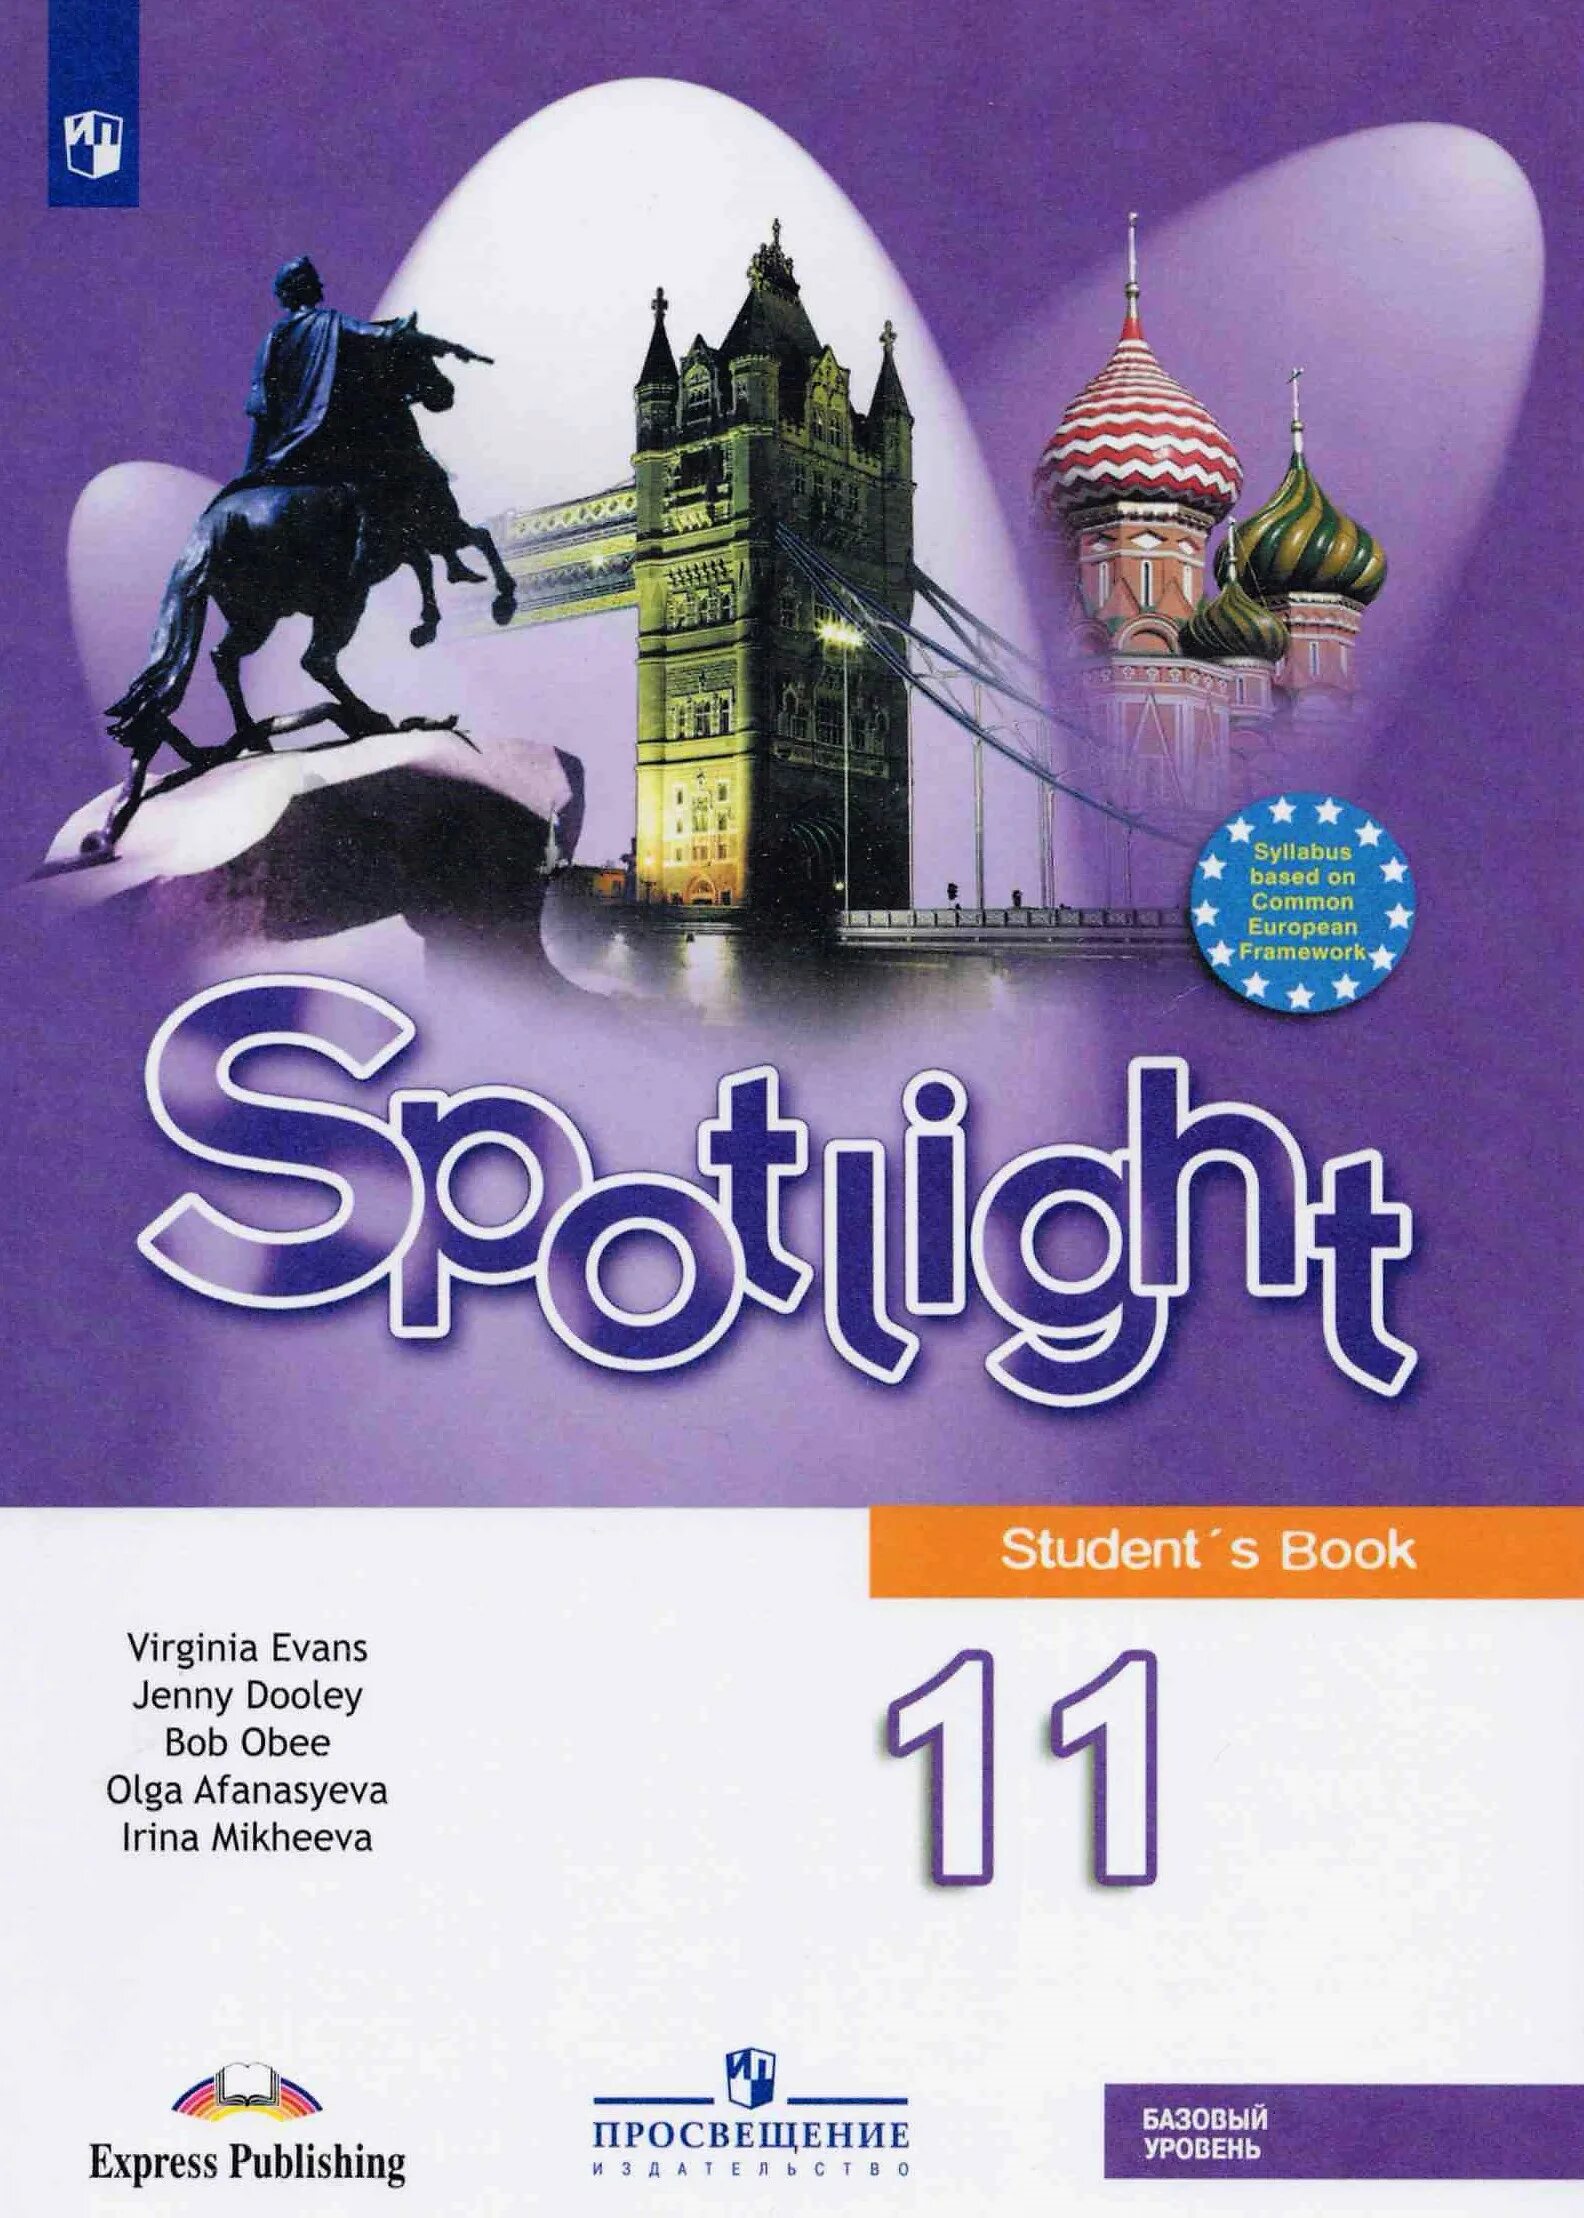 Spotlight 11 класс учебник. Английский в фокусе 11 класс учебник. Английский язык 11 класс Spotlight ваулина. Английский спотлайт 11 класс учебник. Английский язык 11 класс student's book